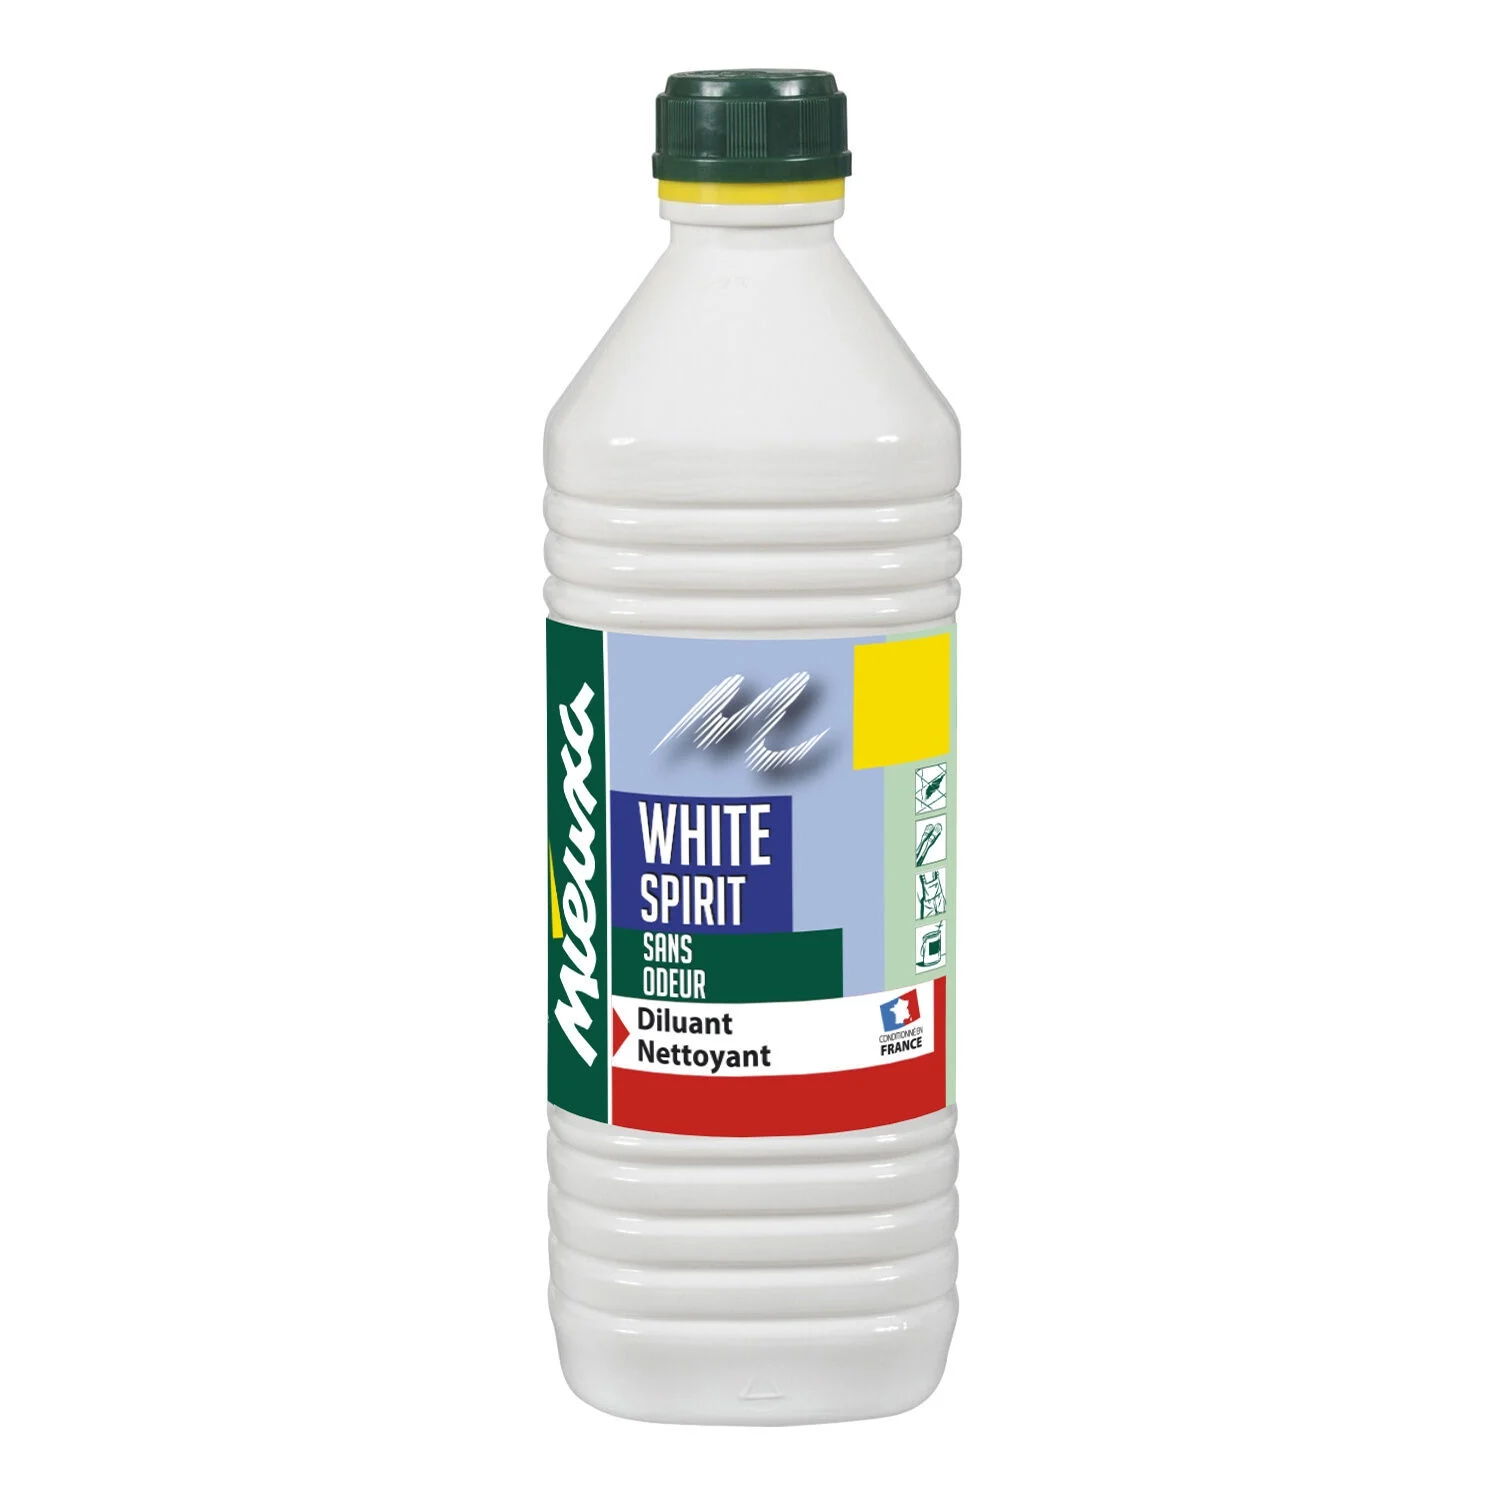 White Spirit Odorless, 1liter - Mieuxa